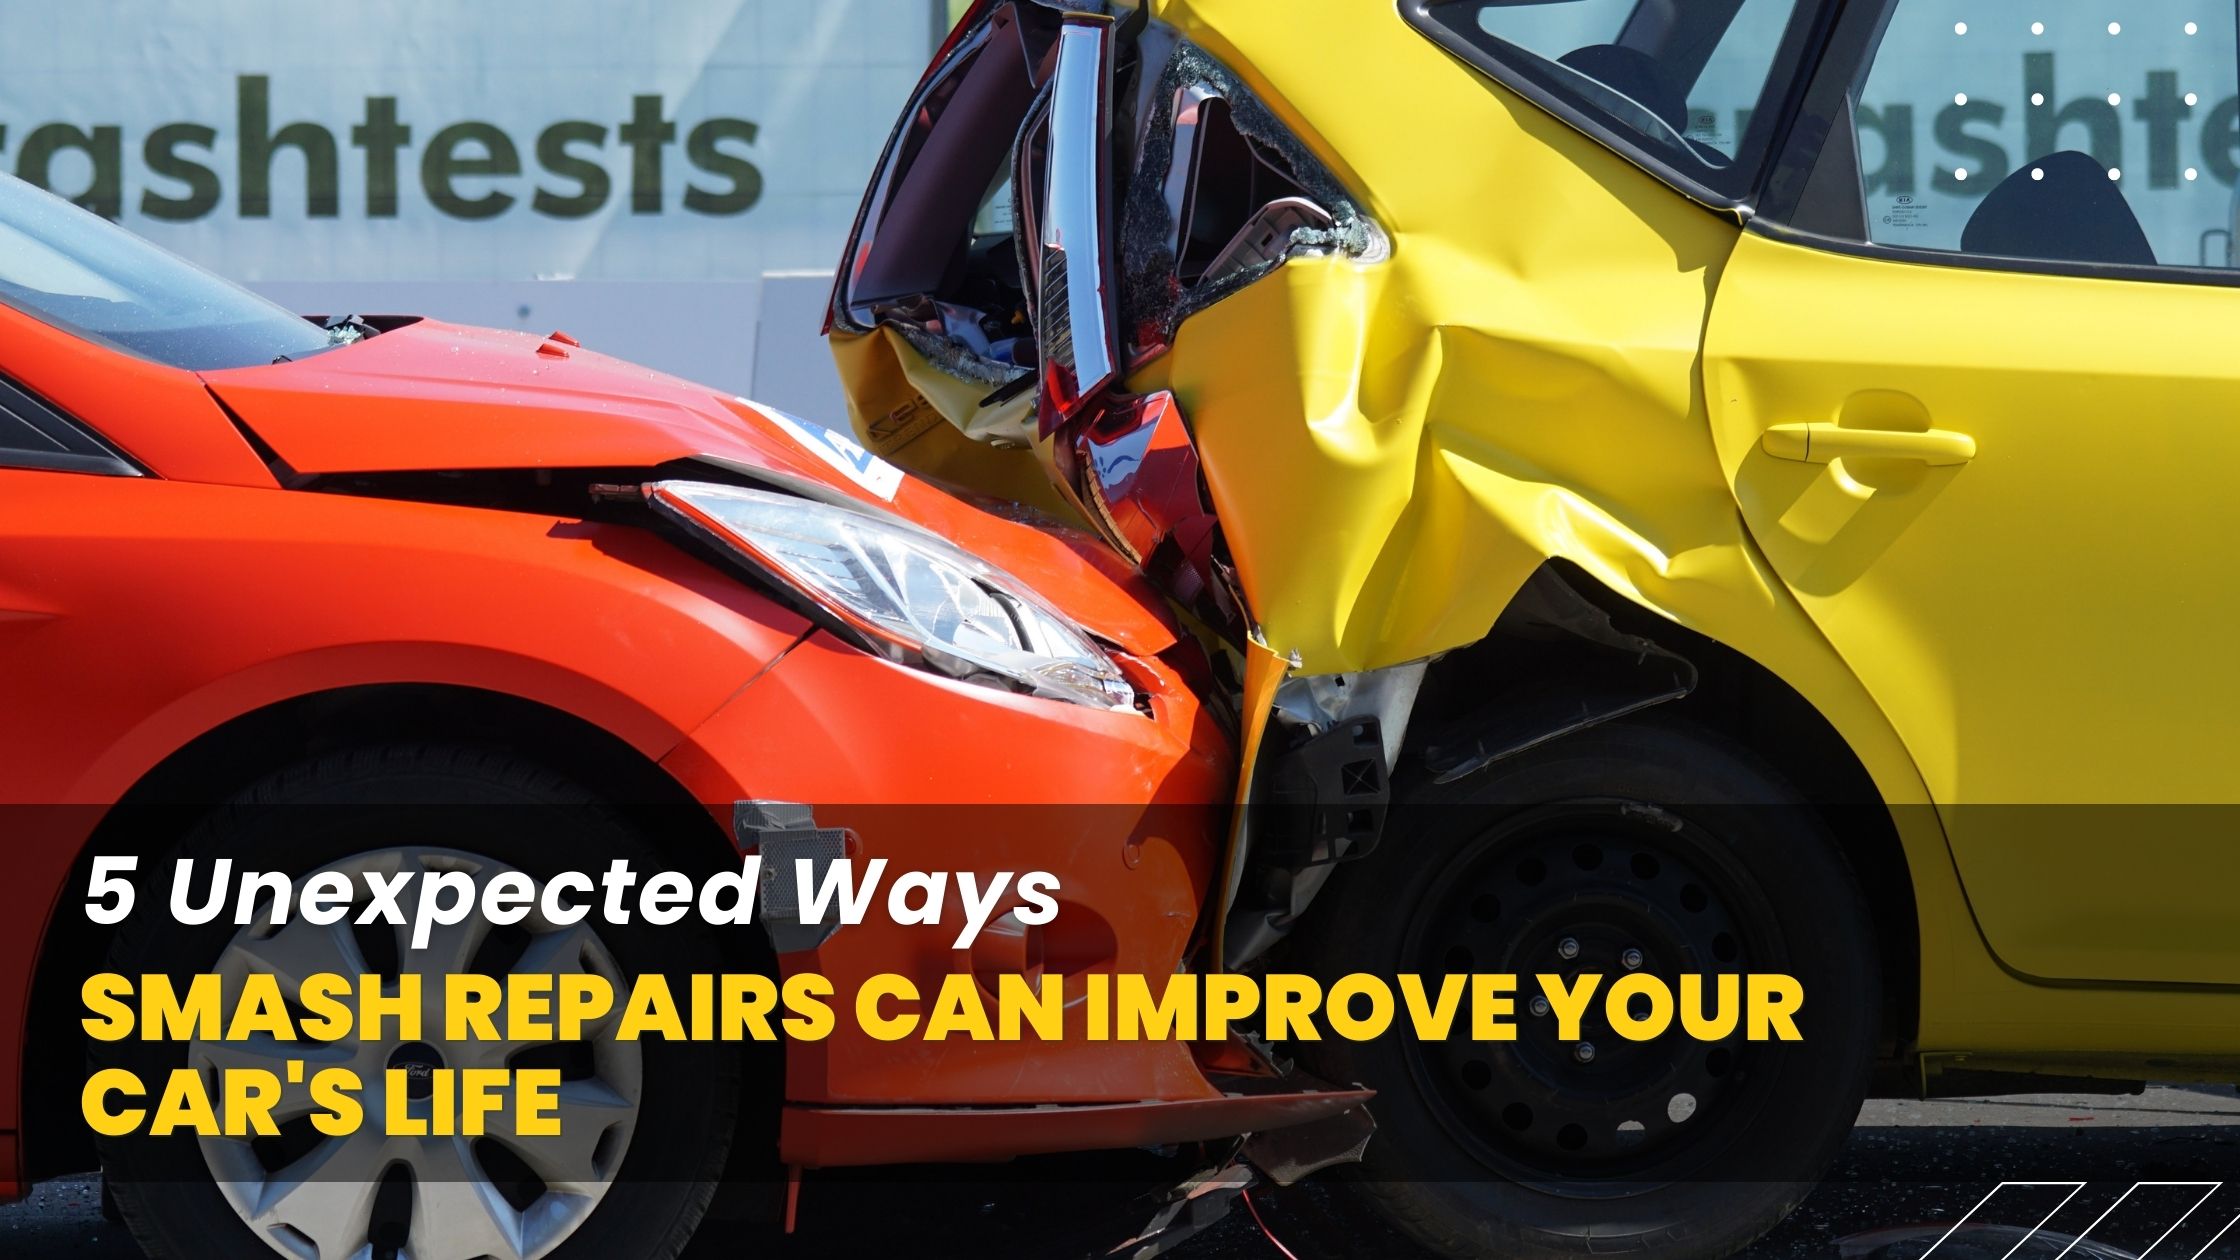 Smash Repairs Can Improve Your Car's Life